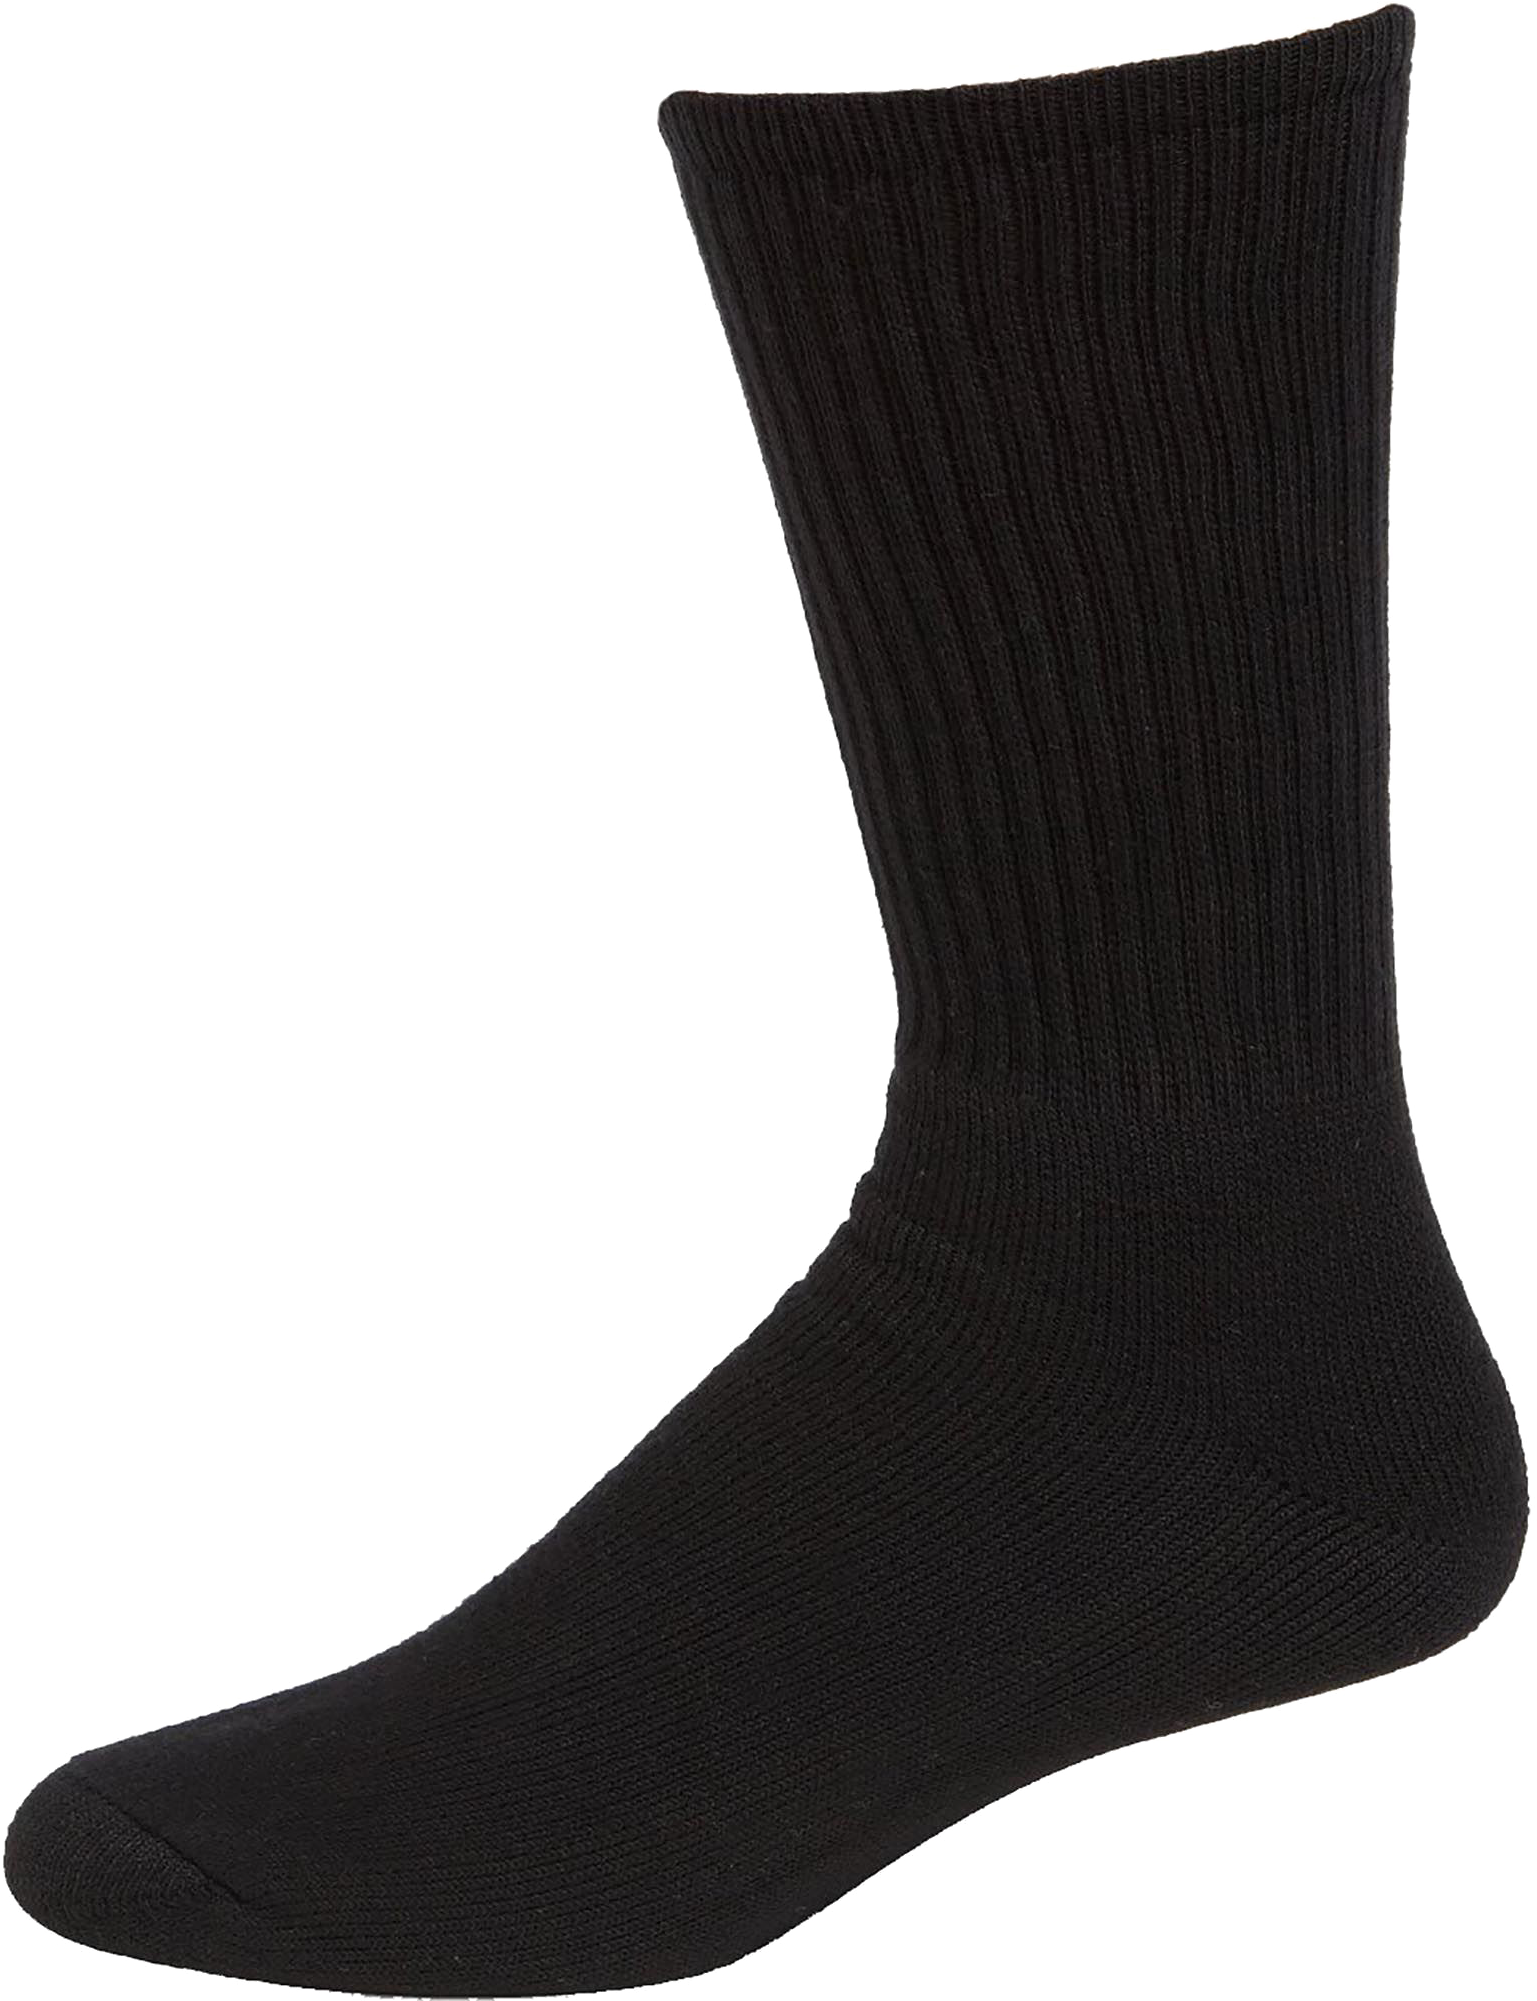 A Black Sock On A Black Background